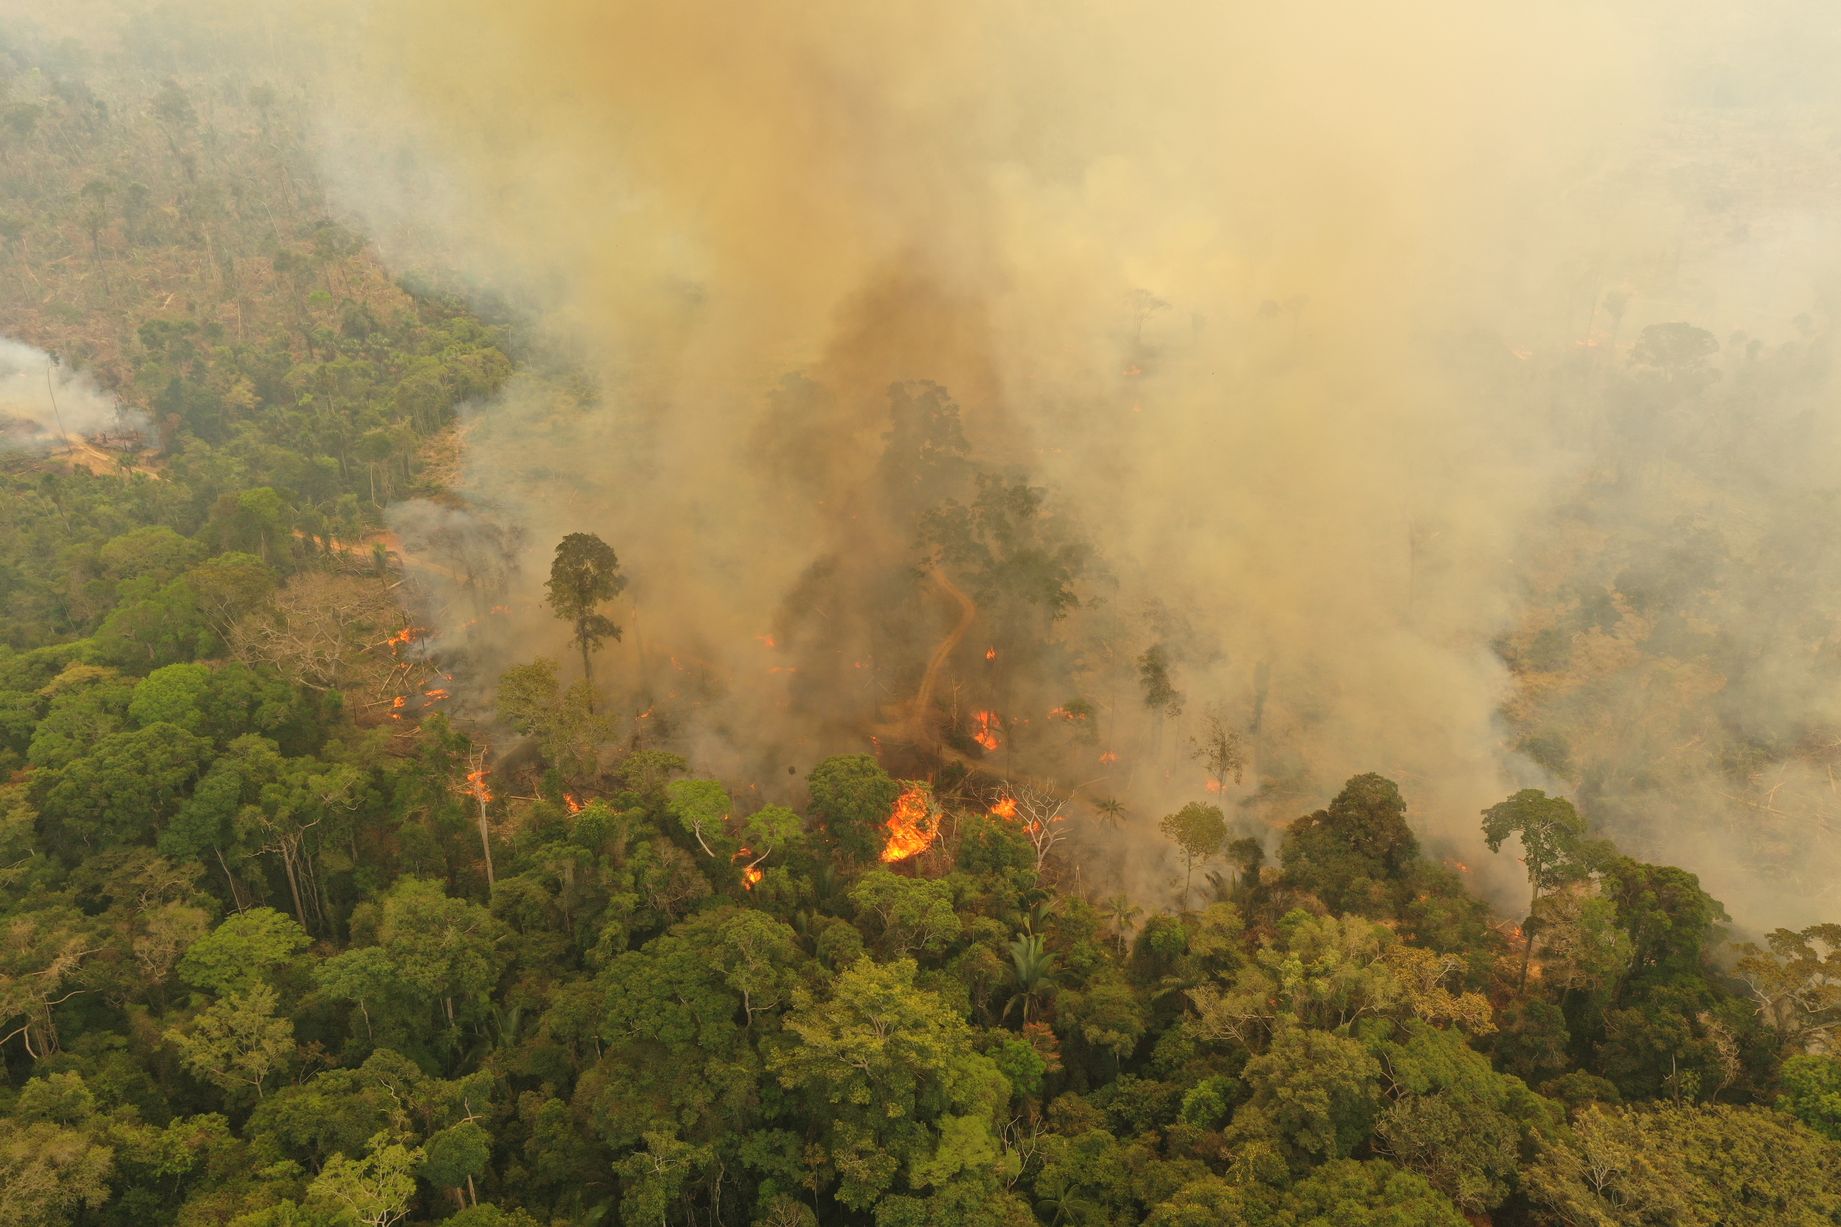 Leonardo DiCaprio Pledged To Give $5 Million To Combat Amazon Wildfires